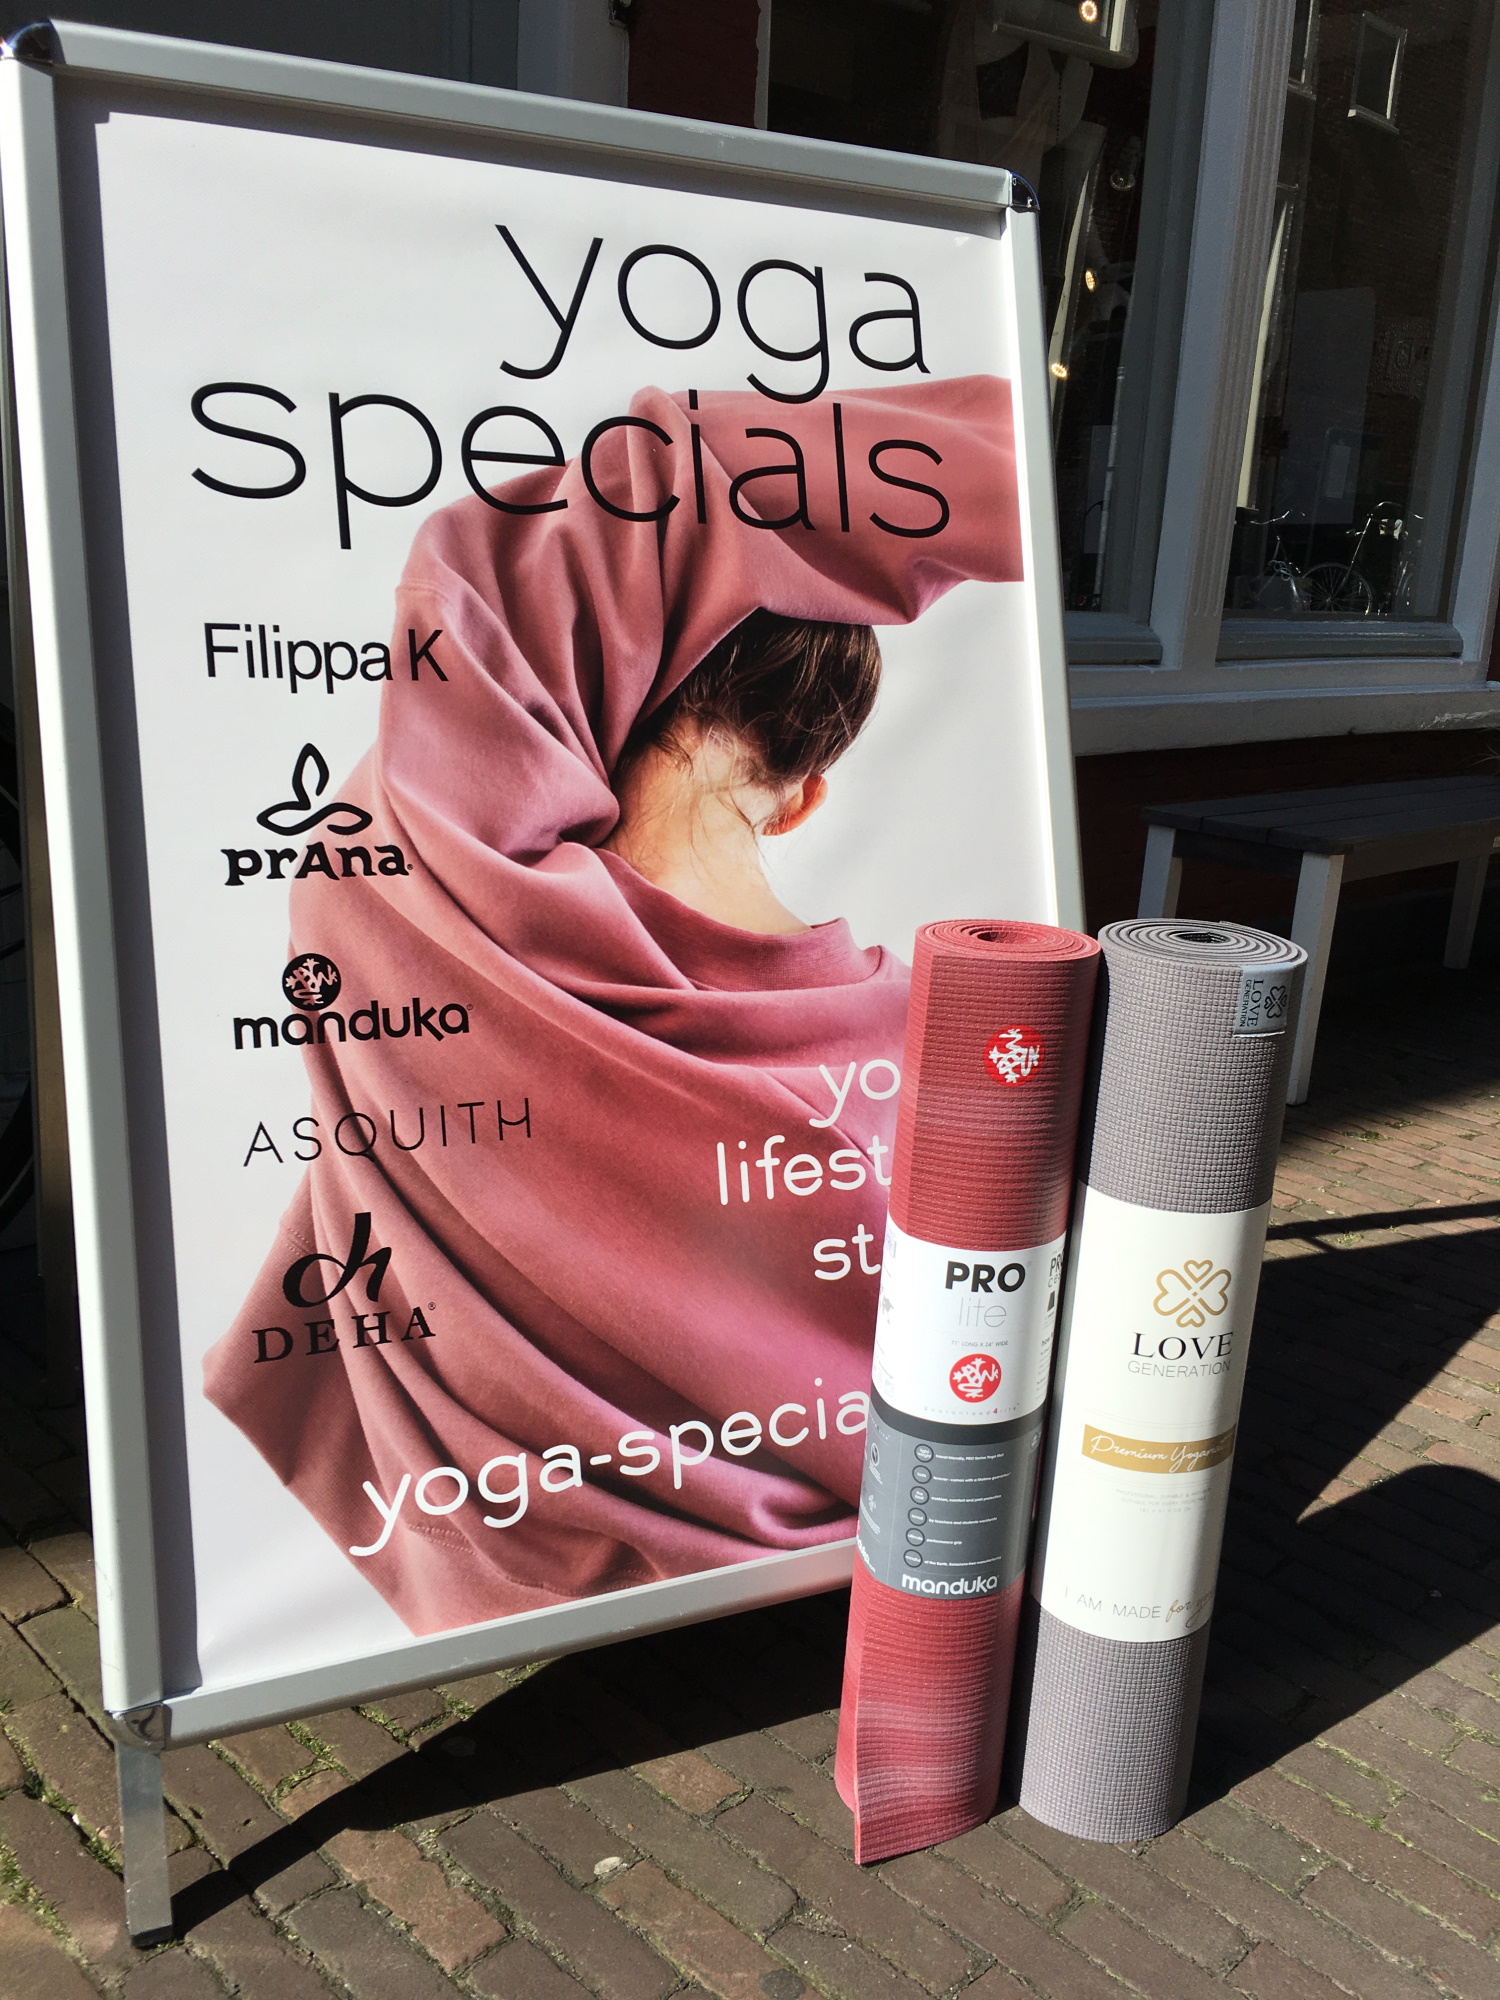 Tram Seminarie Hoelahoep Yoga Specials Leiden - de yoga winkel van Leiden - Yoga Specials